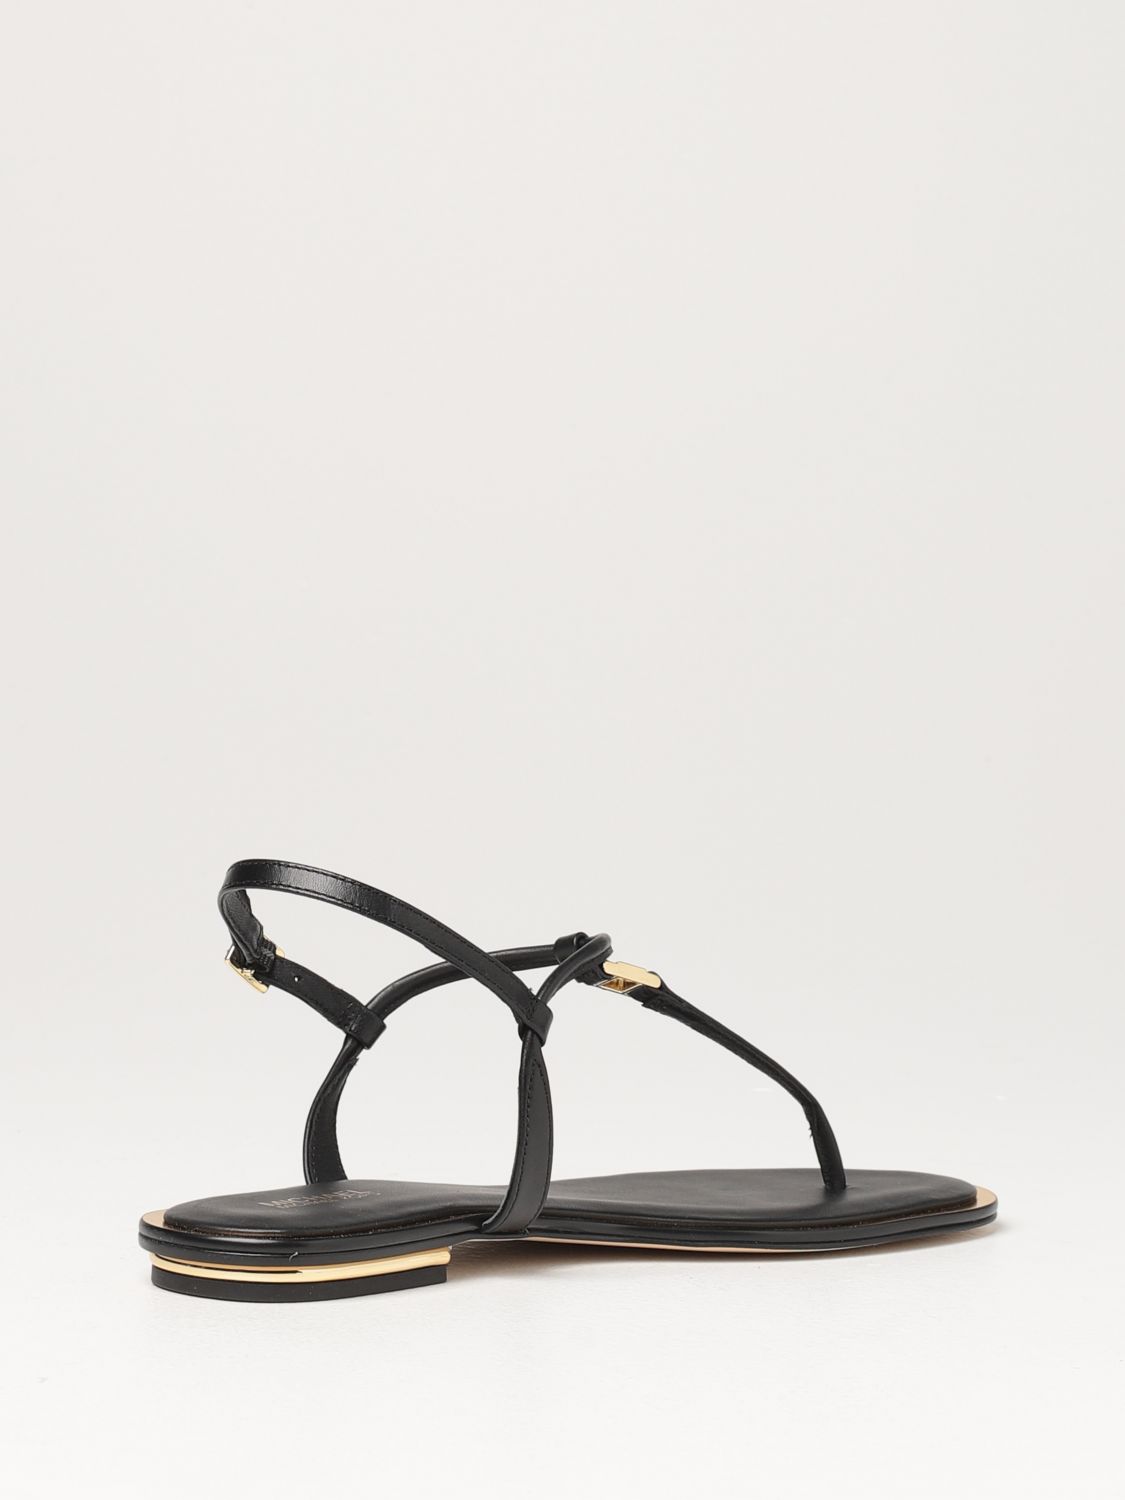 MICHAEL KORS: Michael thong sandals in leather - Black | Michael Kors flat  sandals 40S1FAFA4L online on 